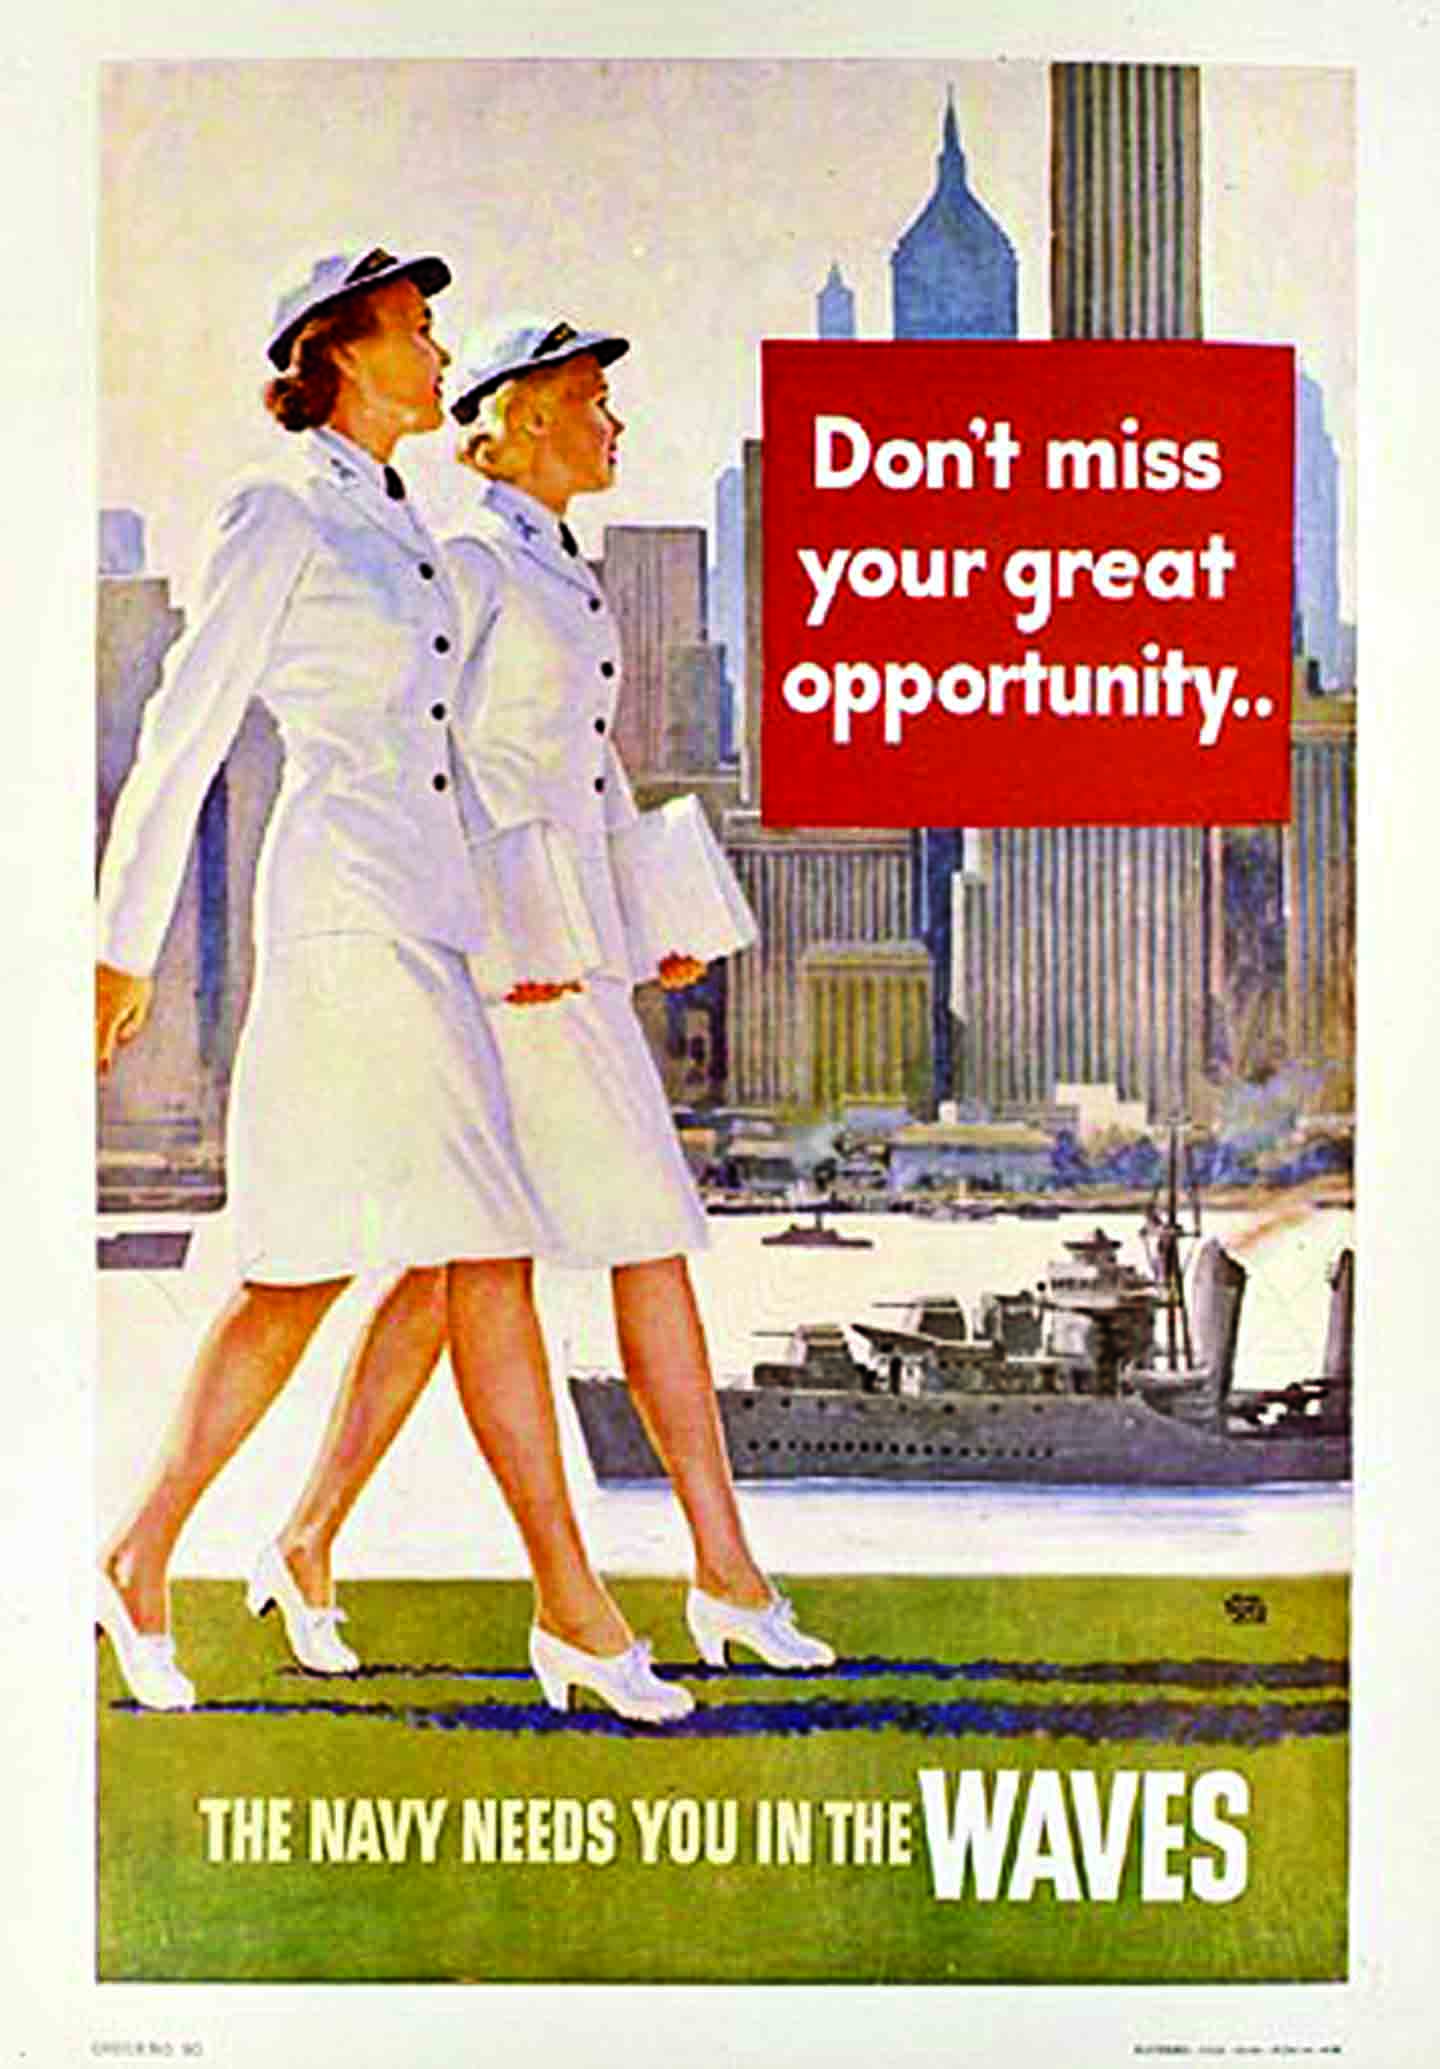 1940s Ladies' Workwear Clothes- Rosies to Nurses